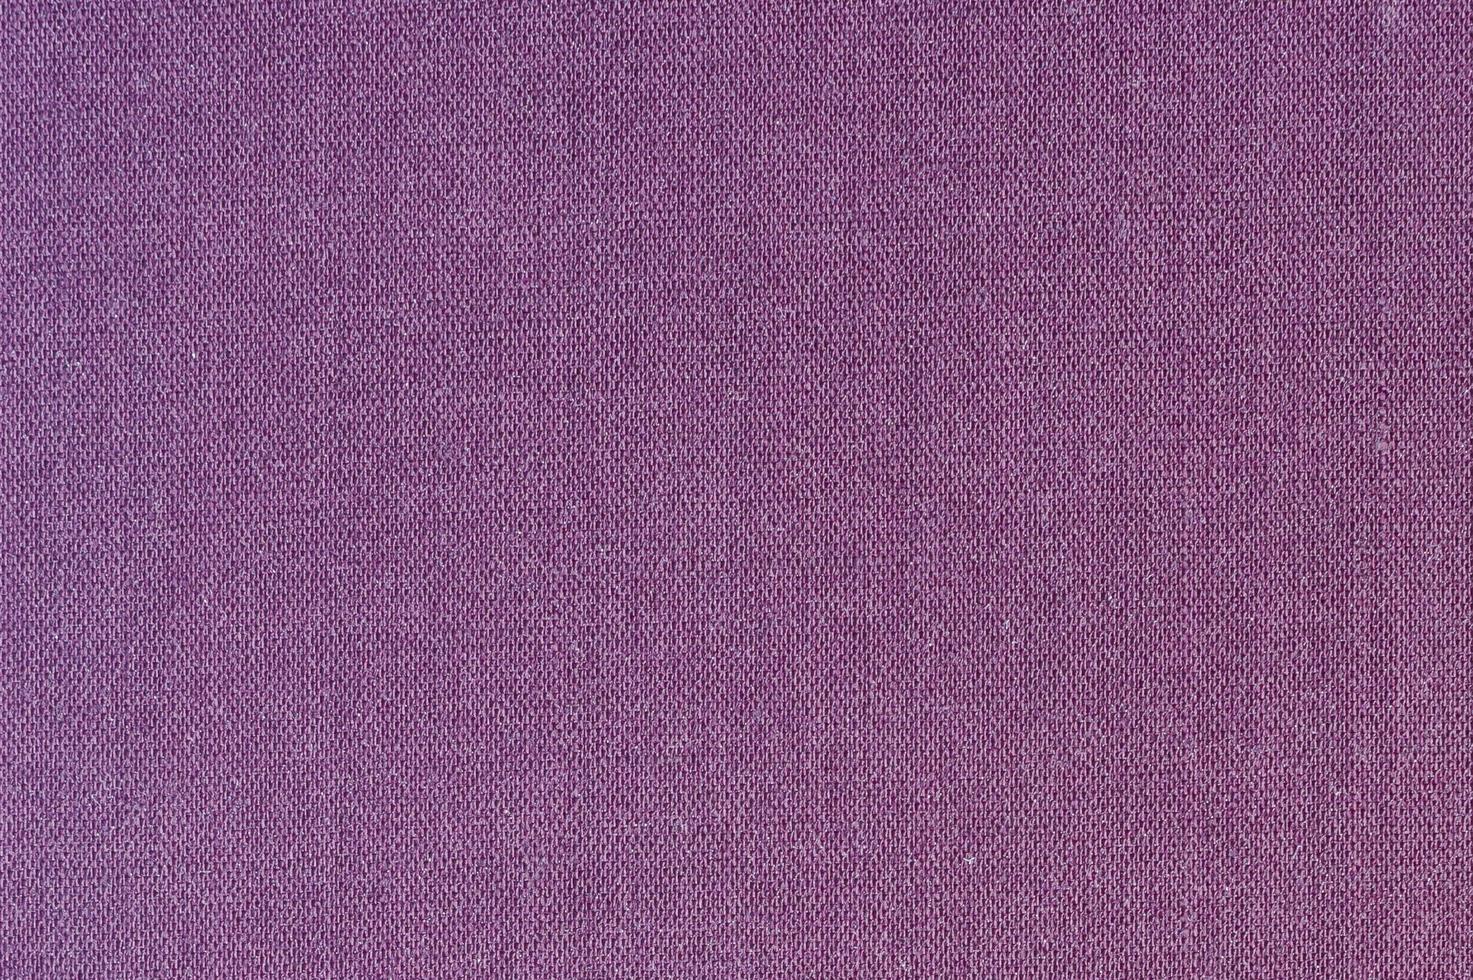 Canvas book cover purple texture photo